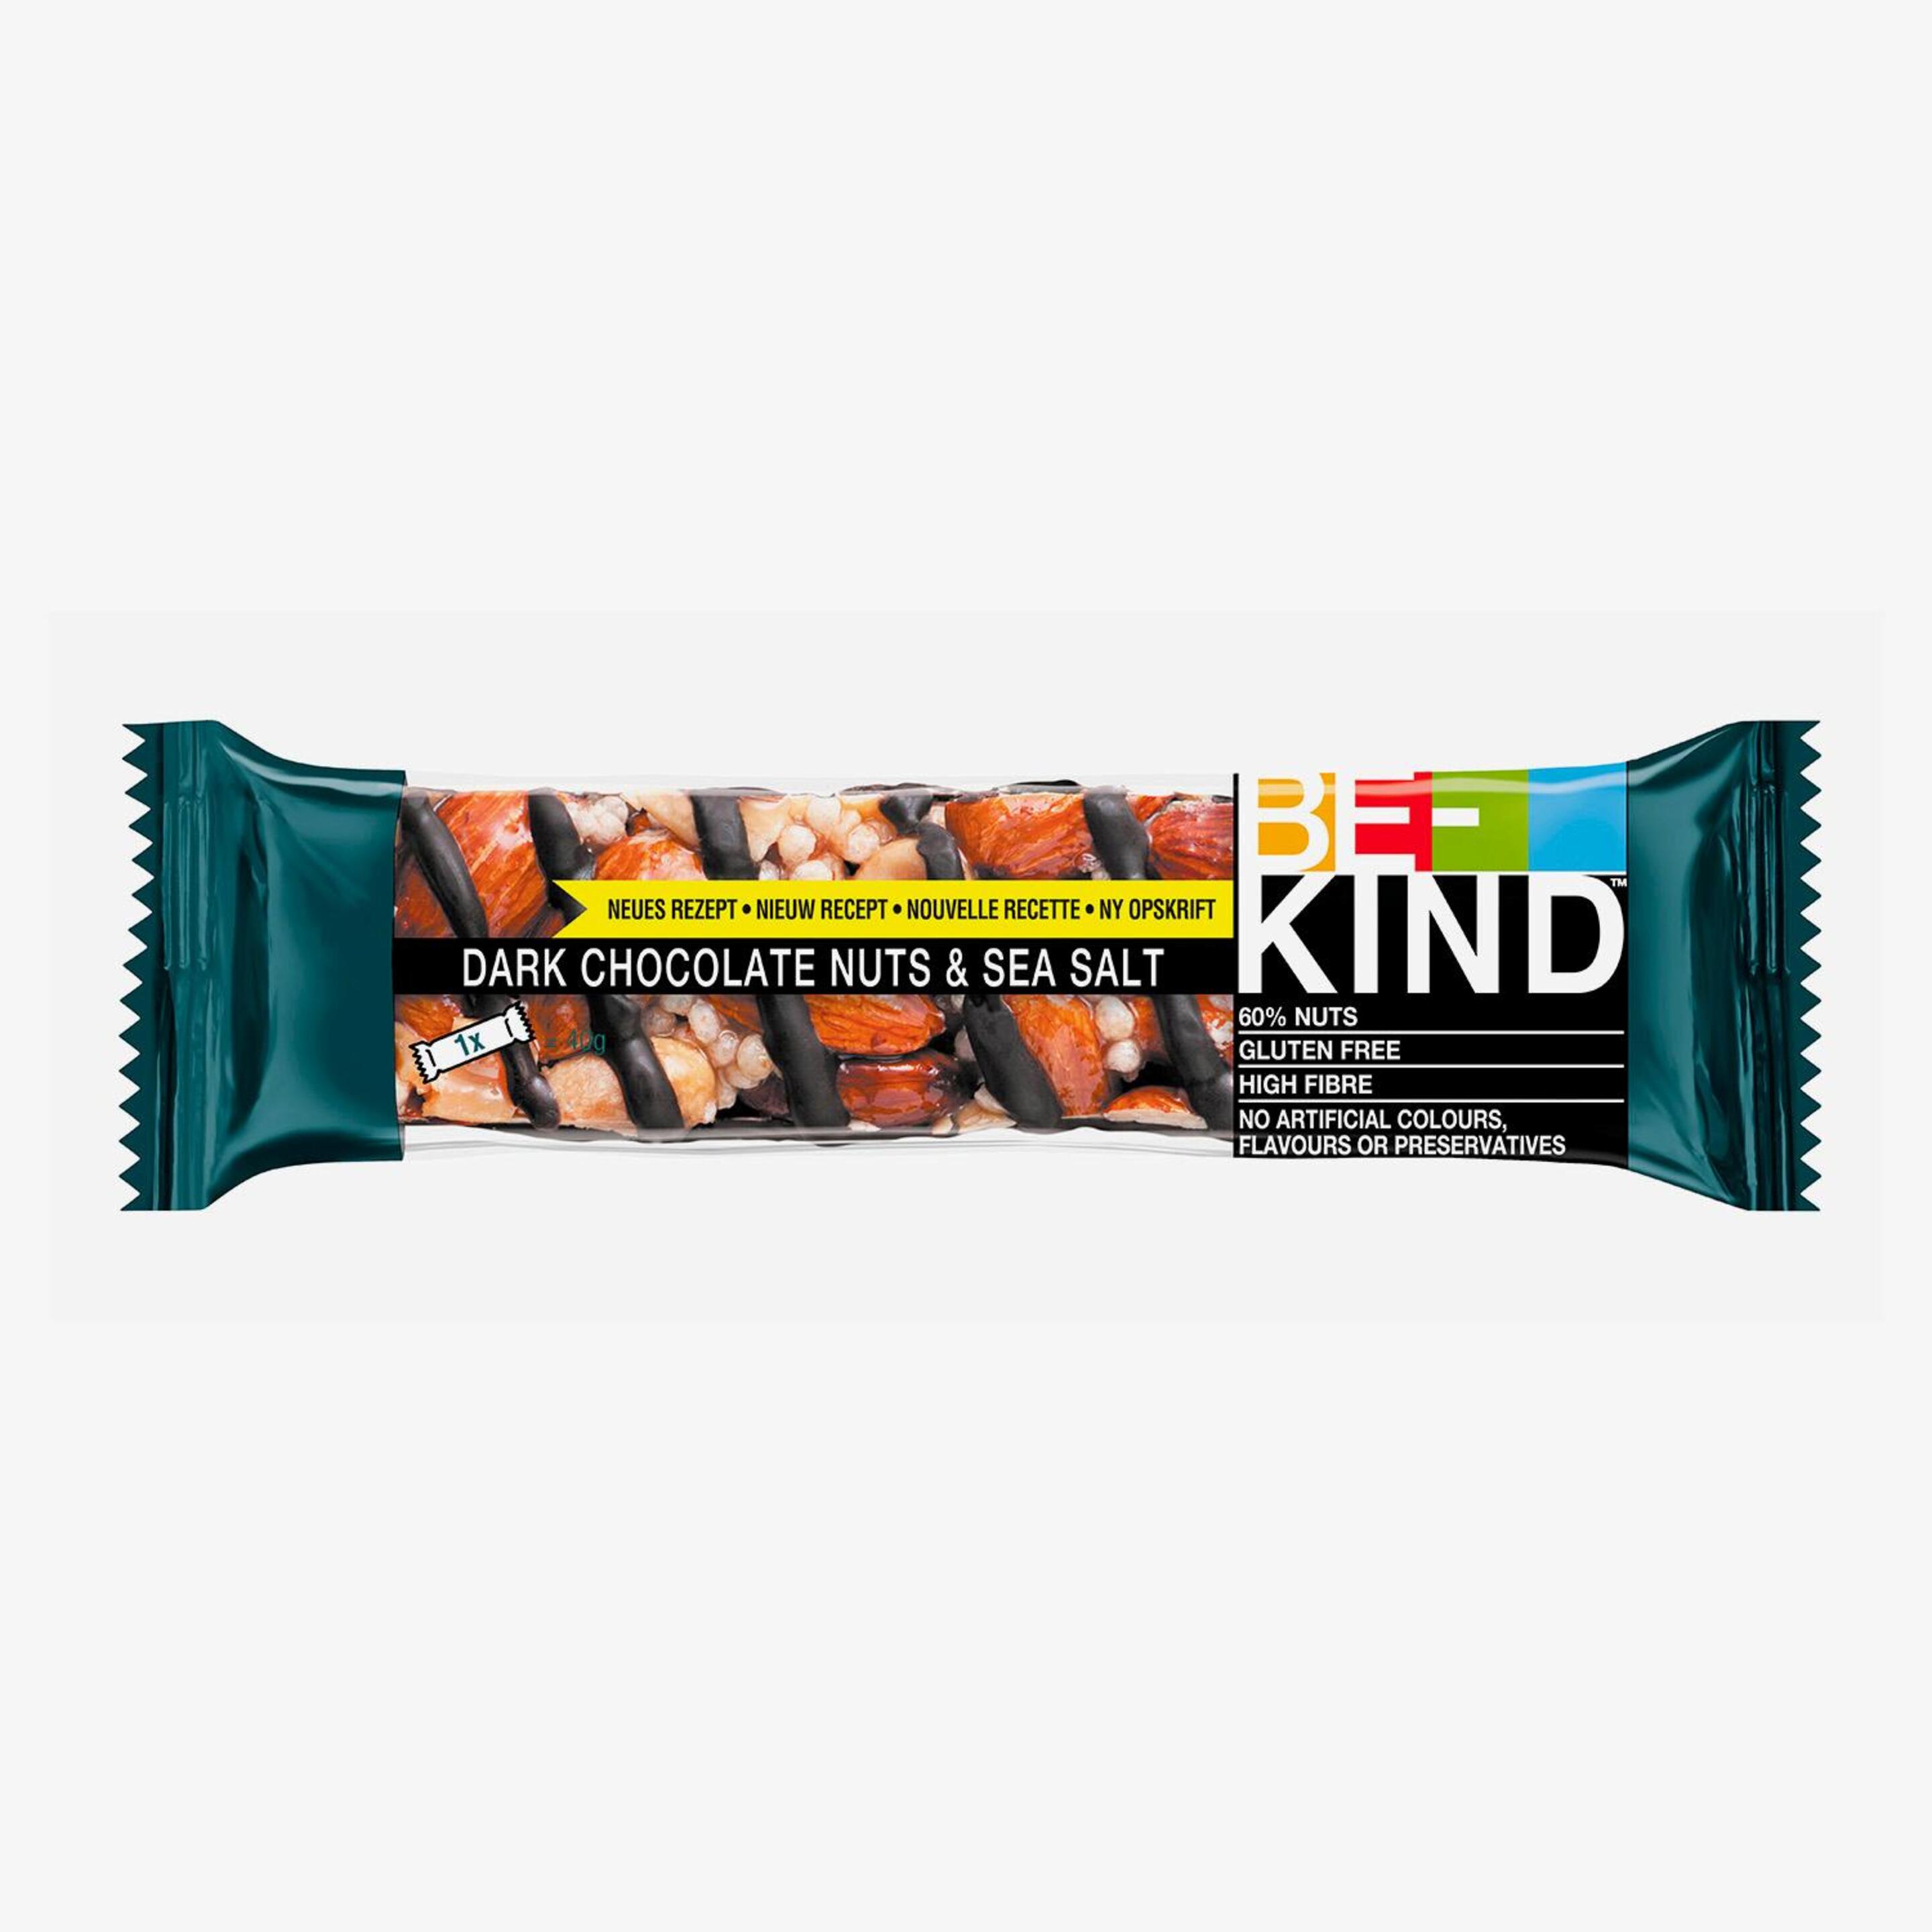 Be-kind Choco 40g